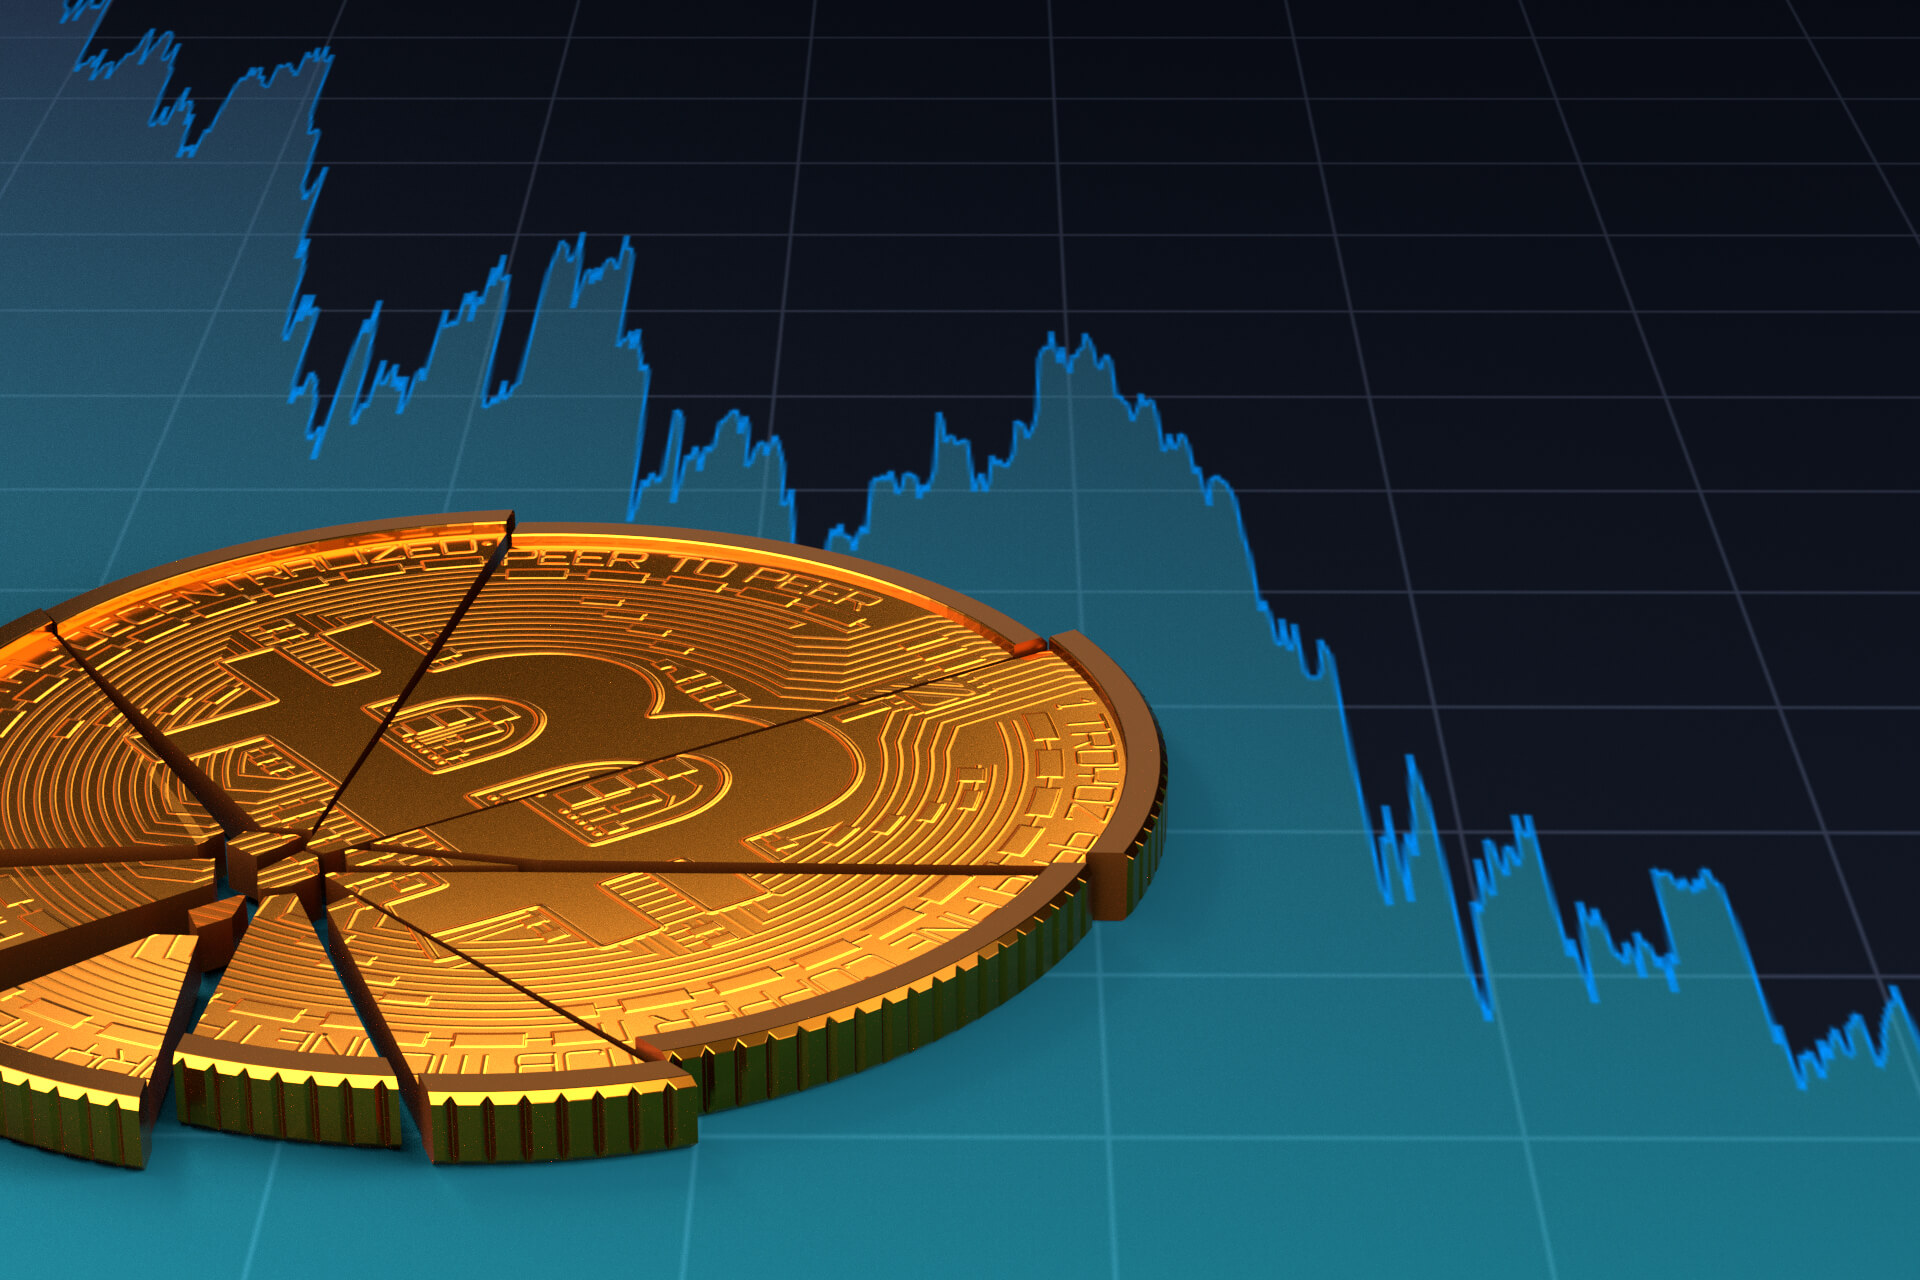 Bitcoin BTCUSD stock price crash free image download